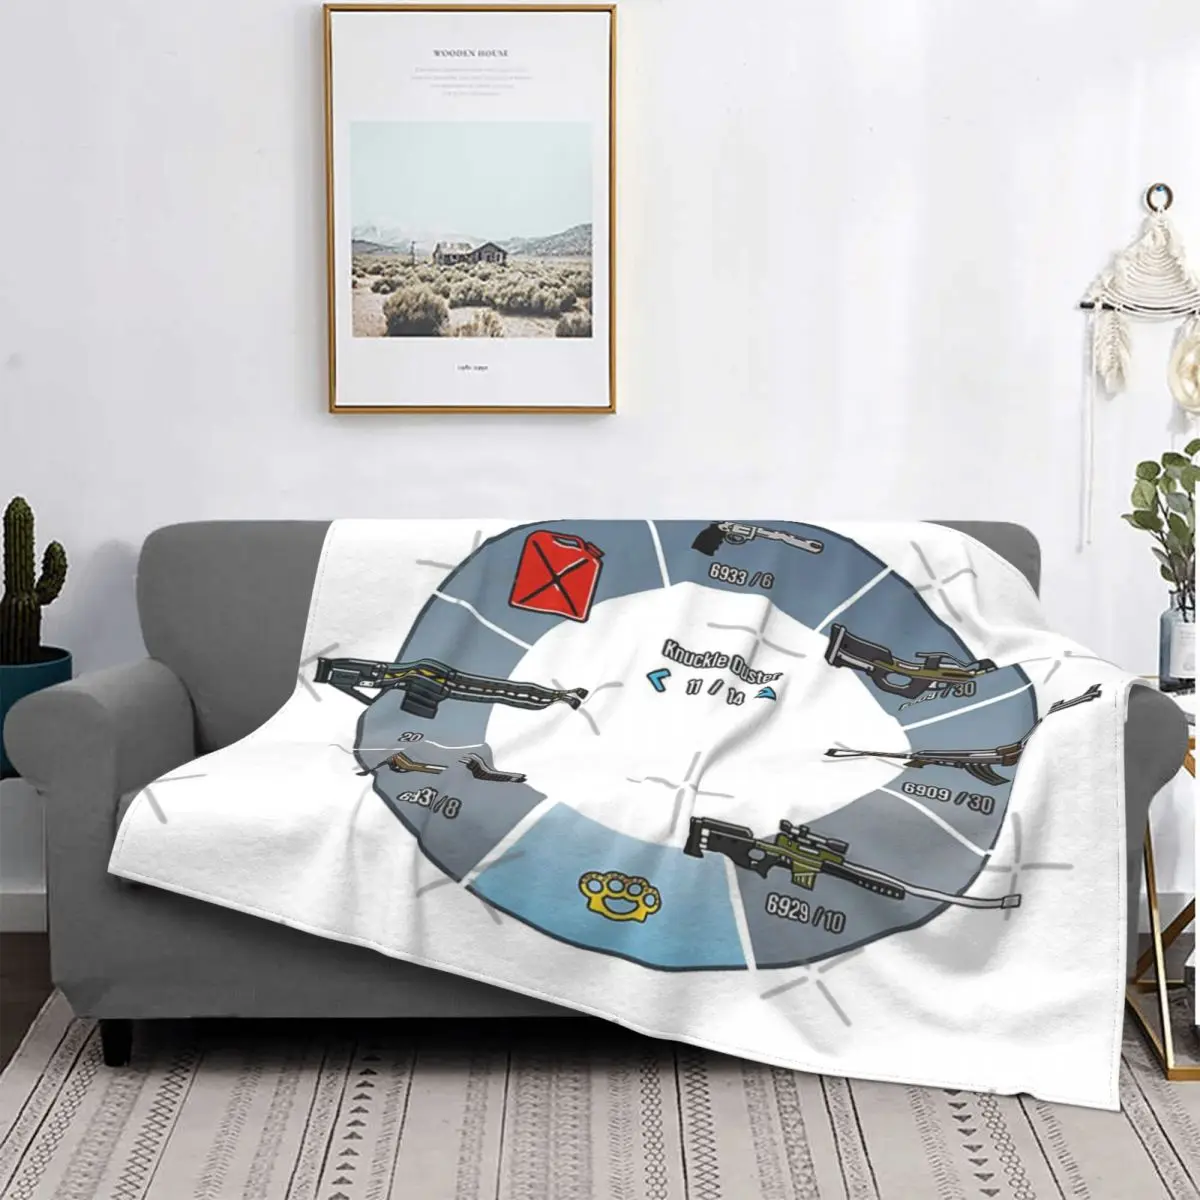 

GTA V Weapon Wheel-Manta de alta calidad, para cama colcha, edredones a cuadros, manta para bebé, mantas para camas de verano